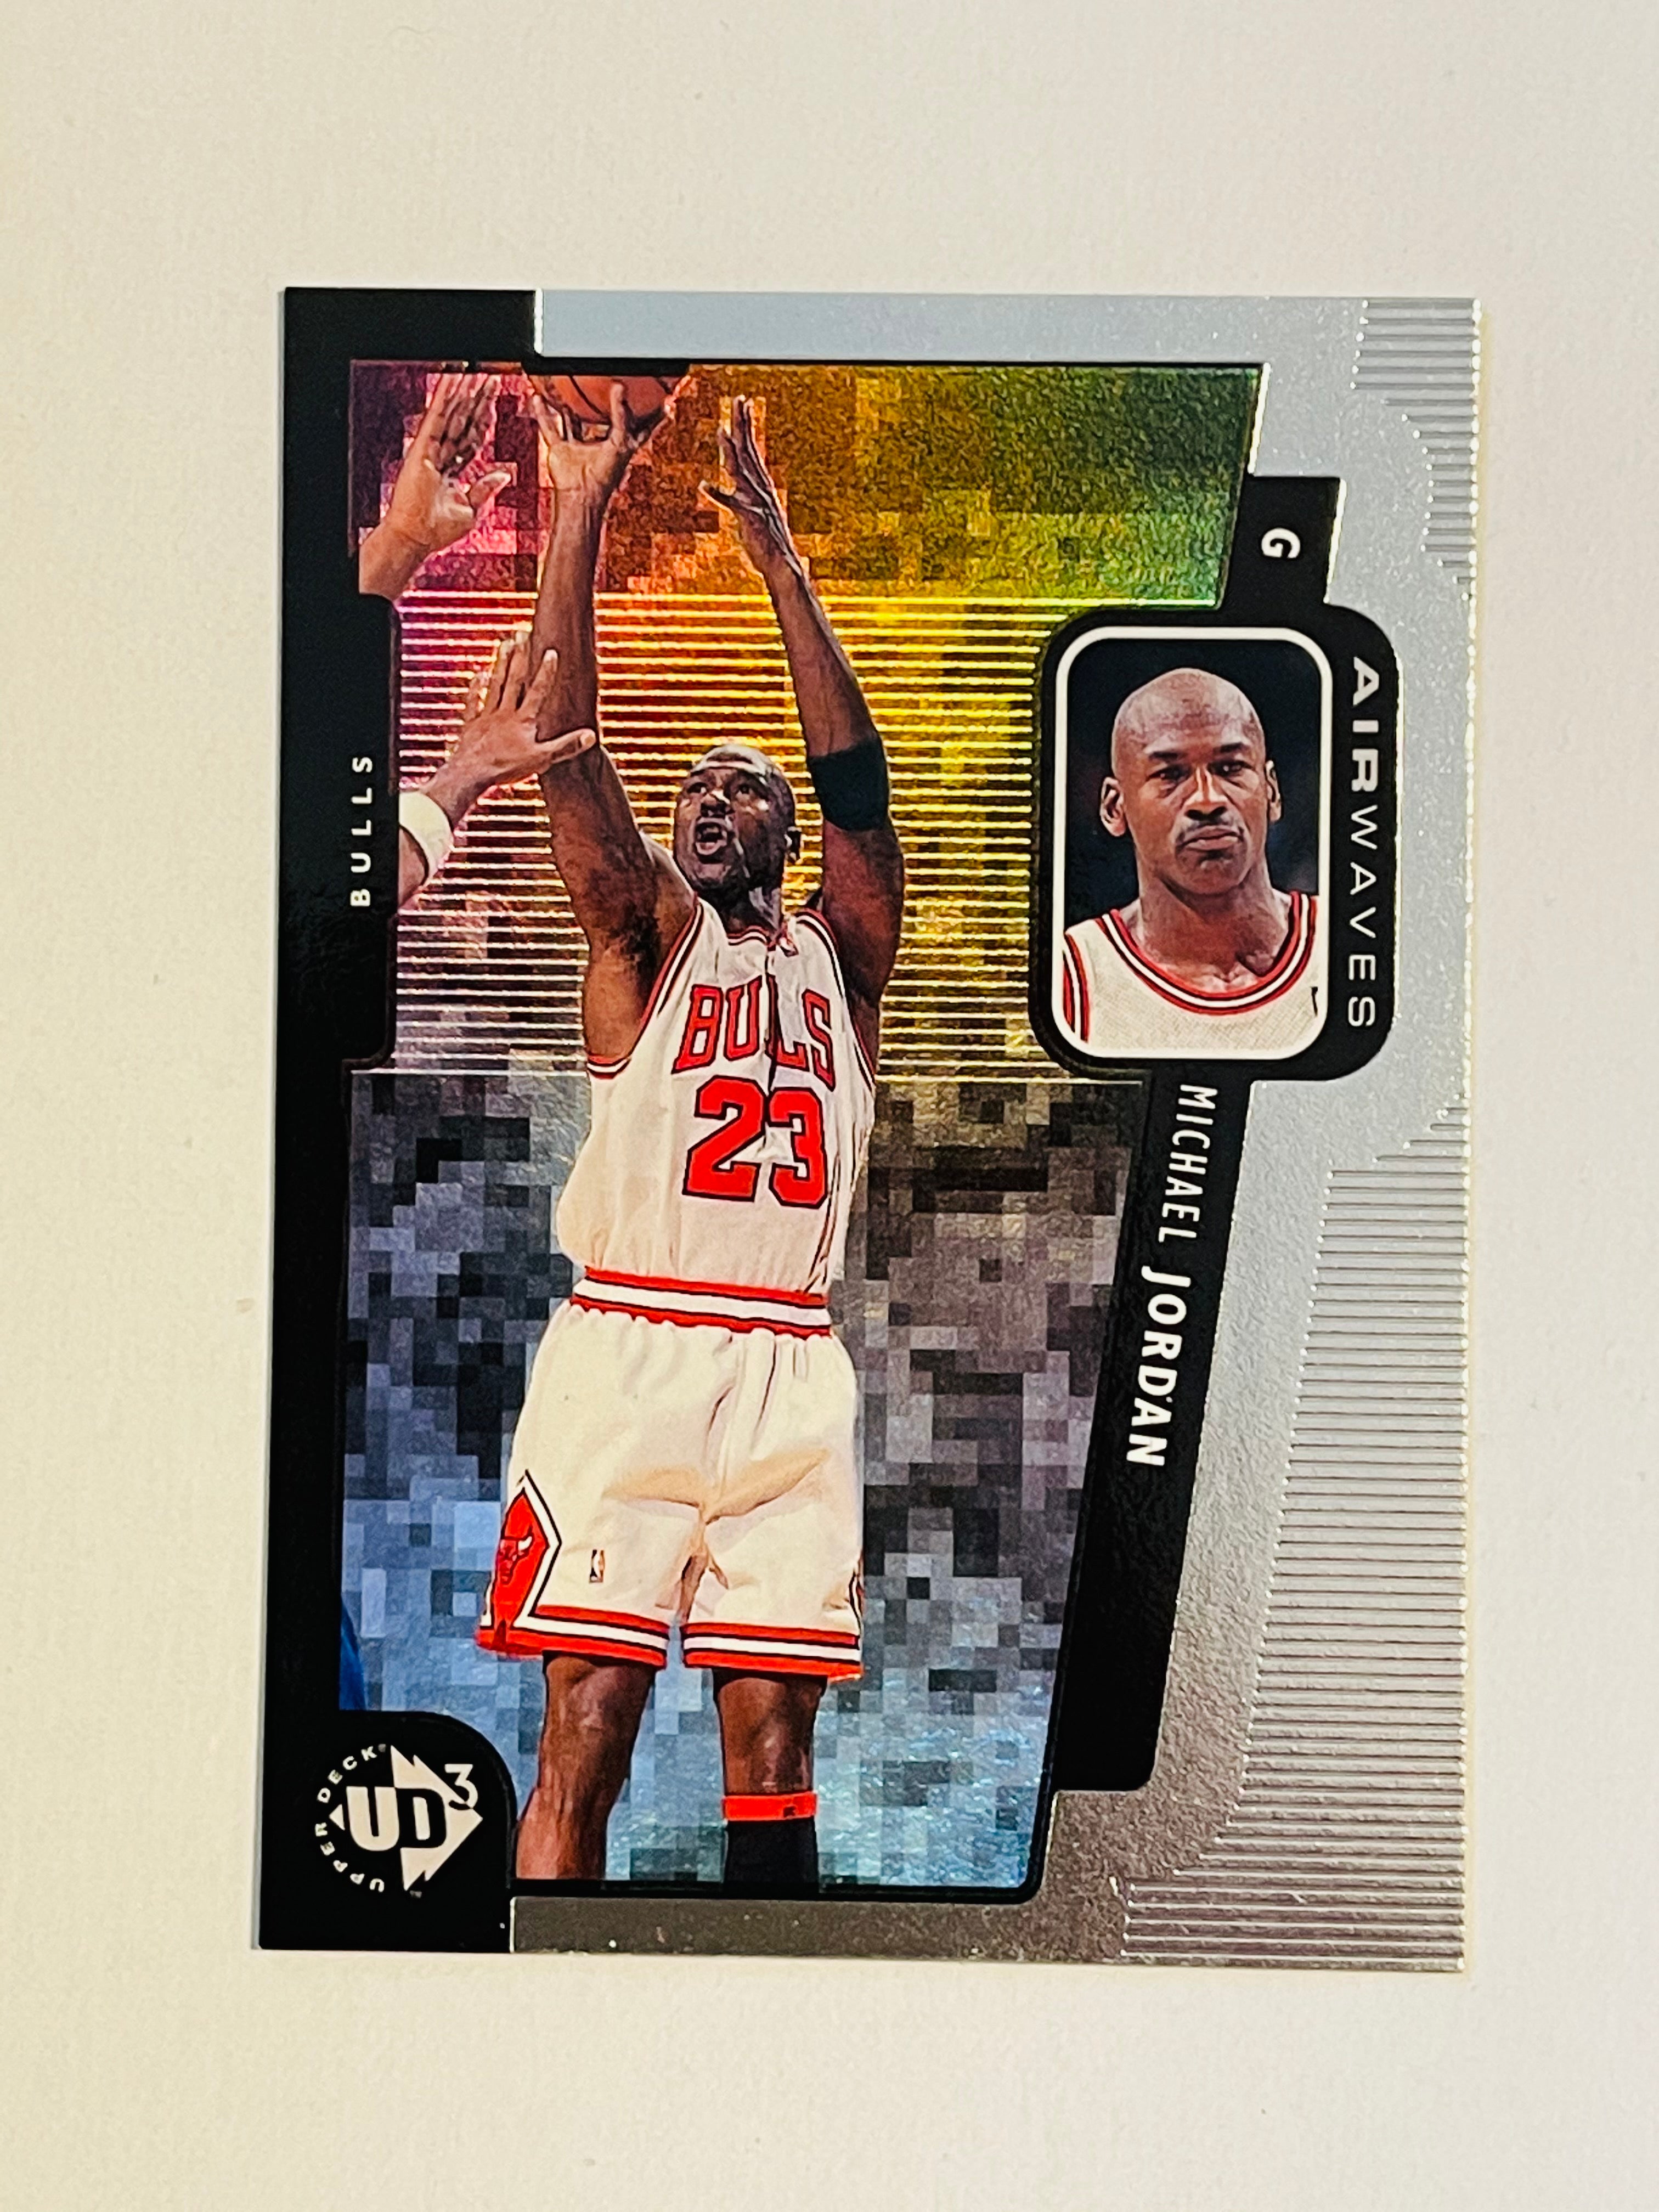 Michael Jordan rare Upper Deck UD3 foil promo card 1998